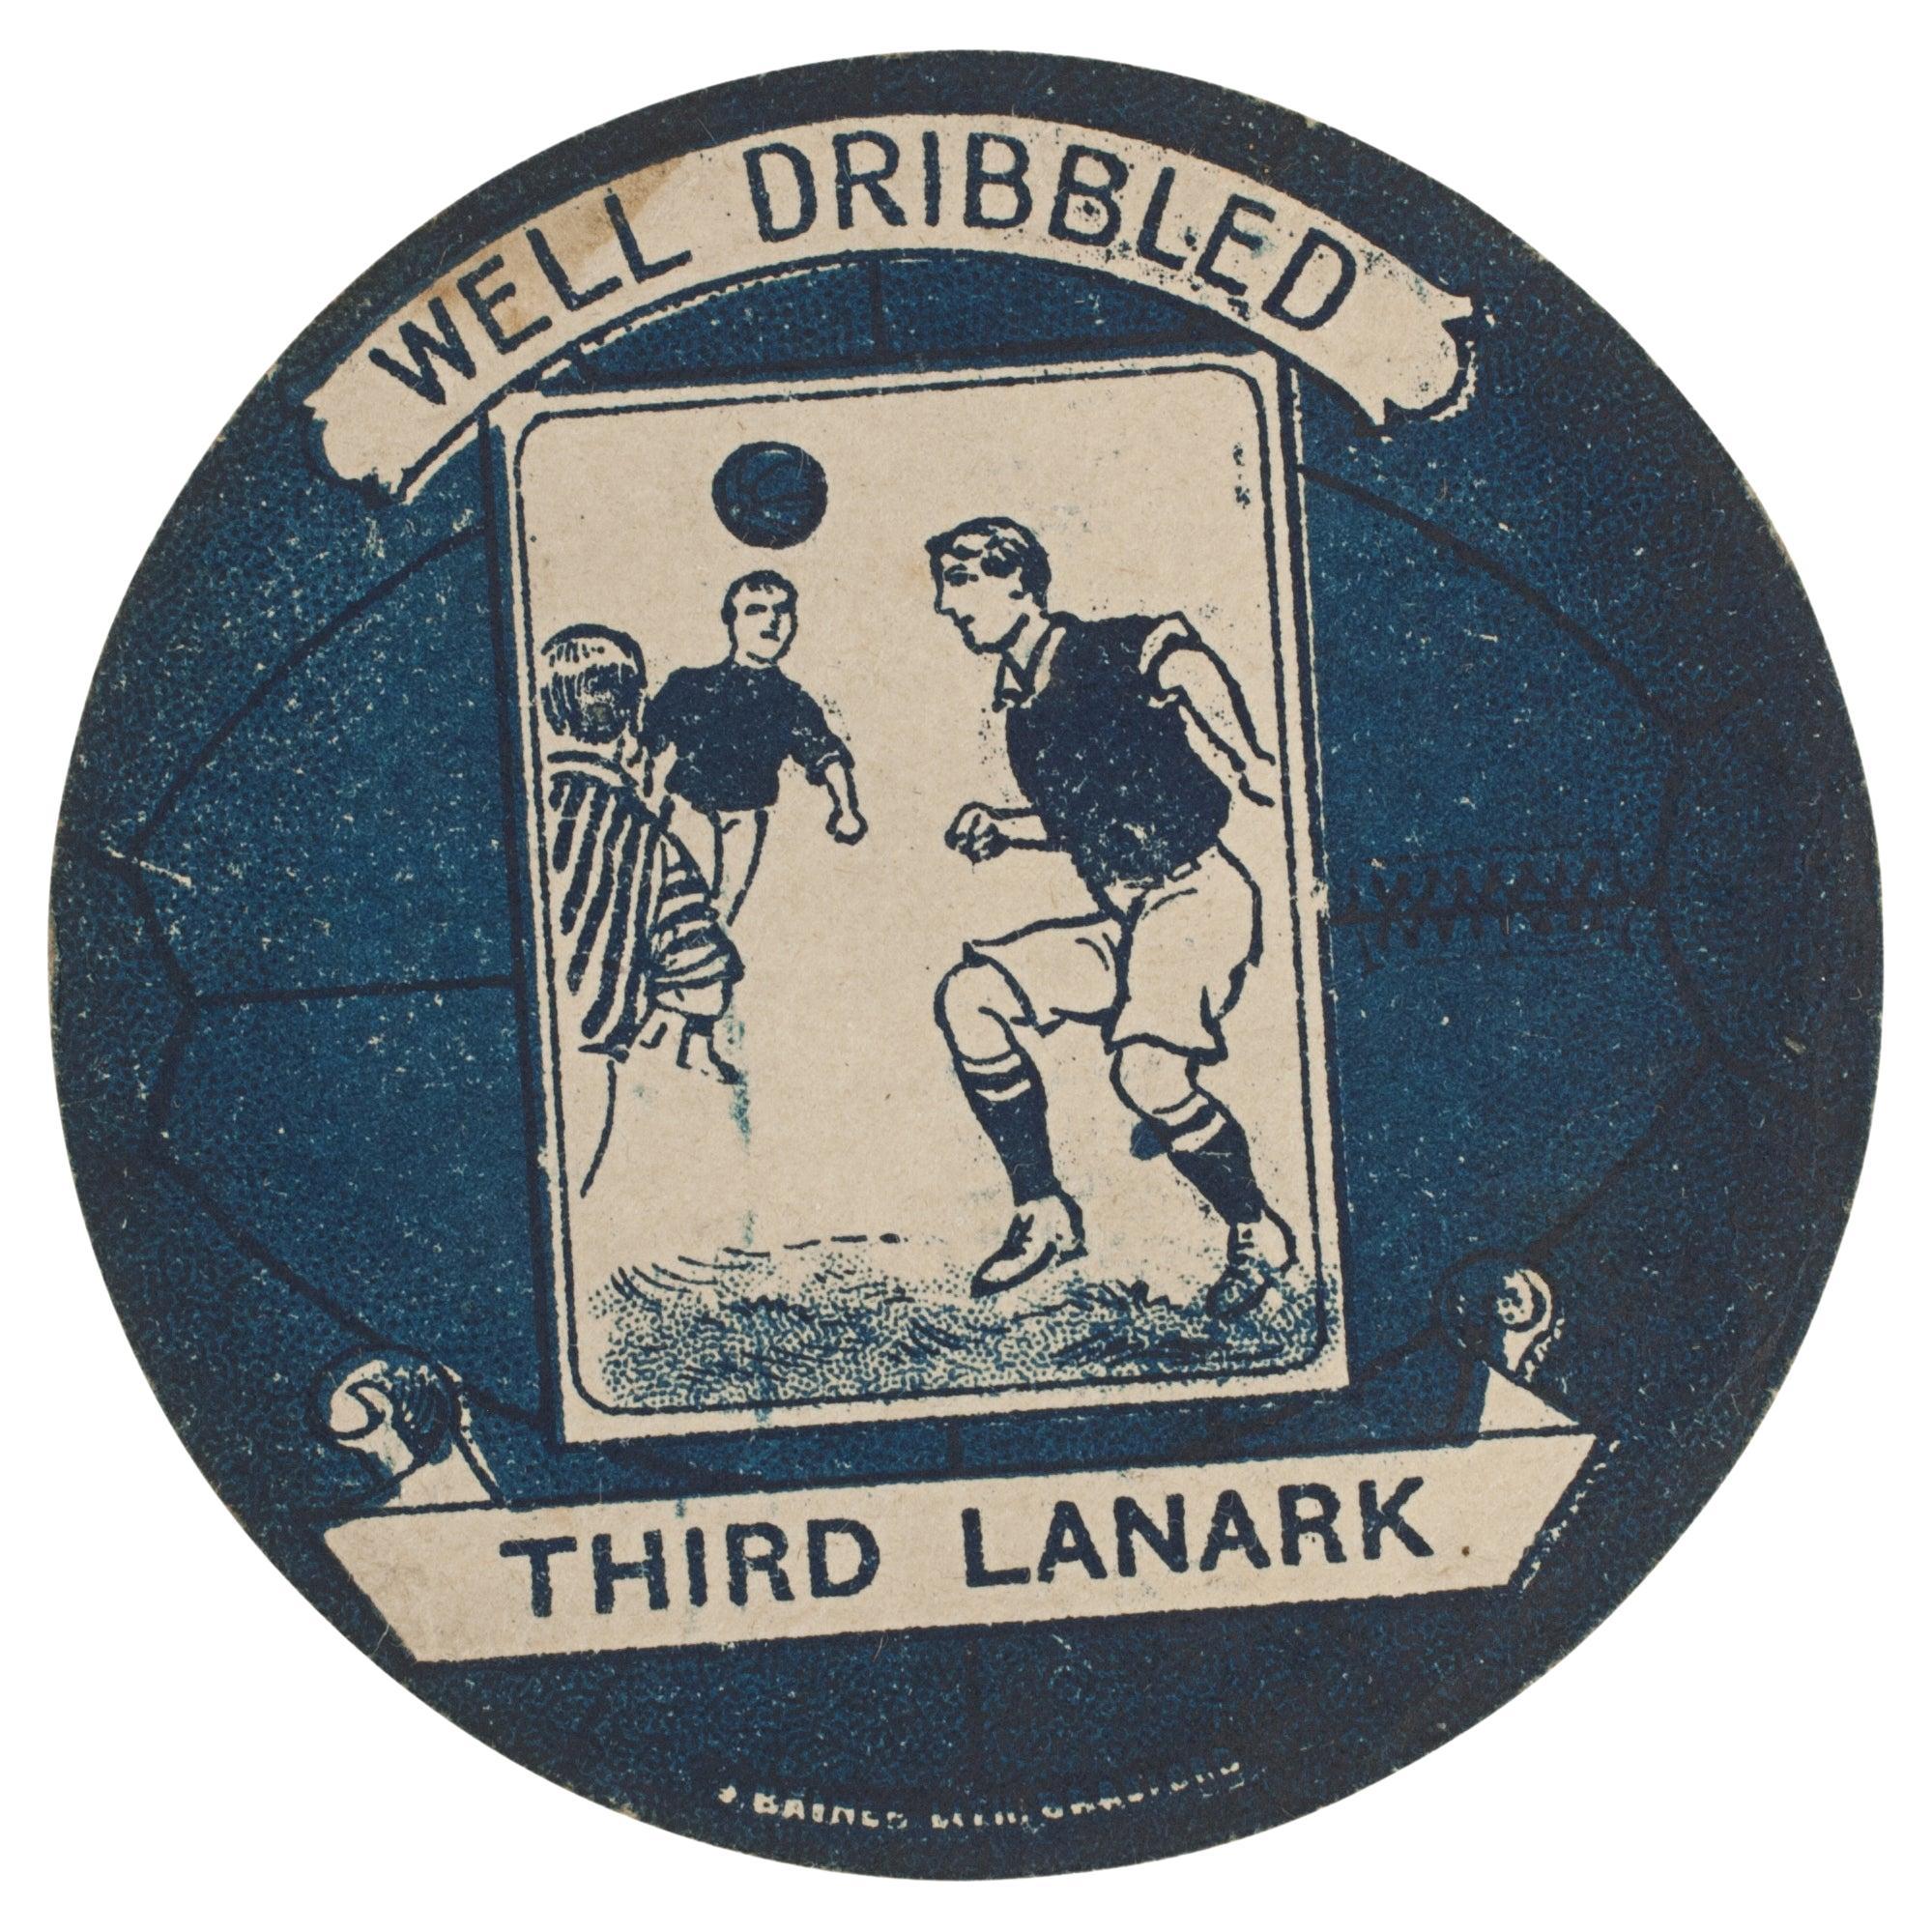  Antique Baines Football Trade Card, Third Lanark